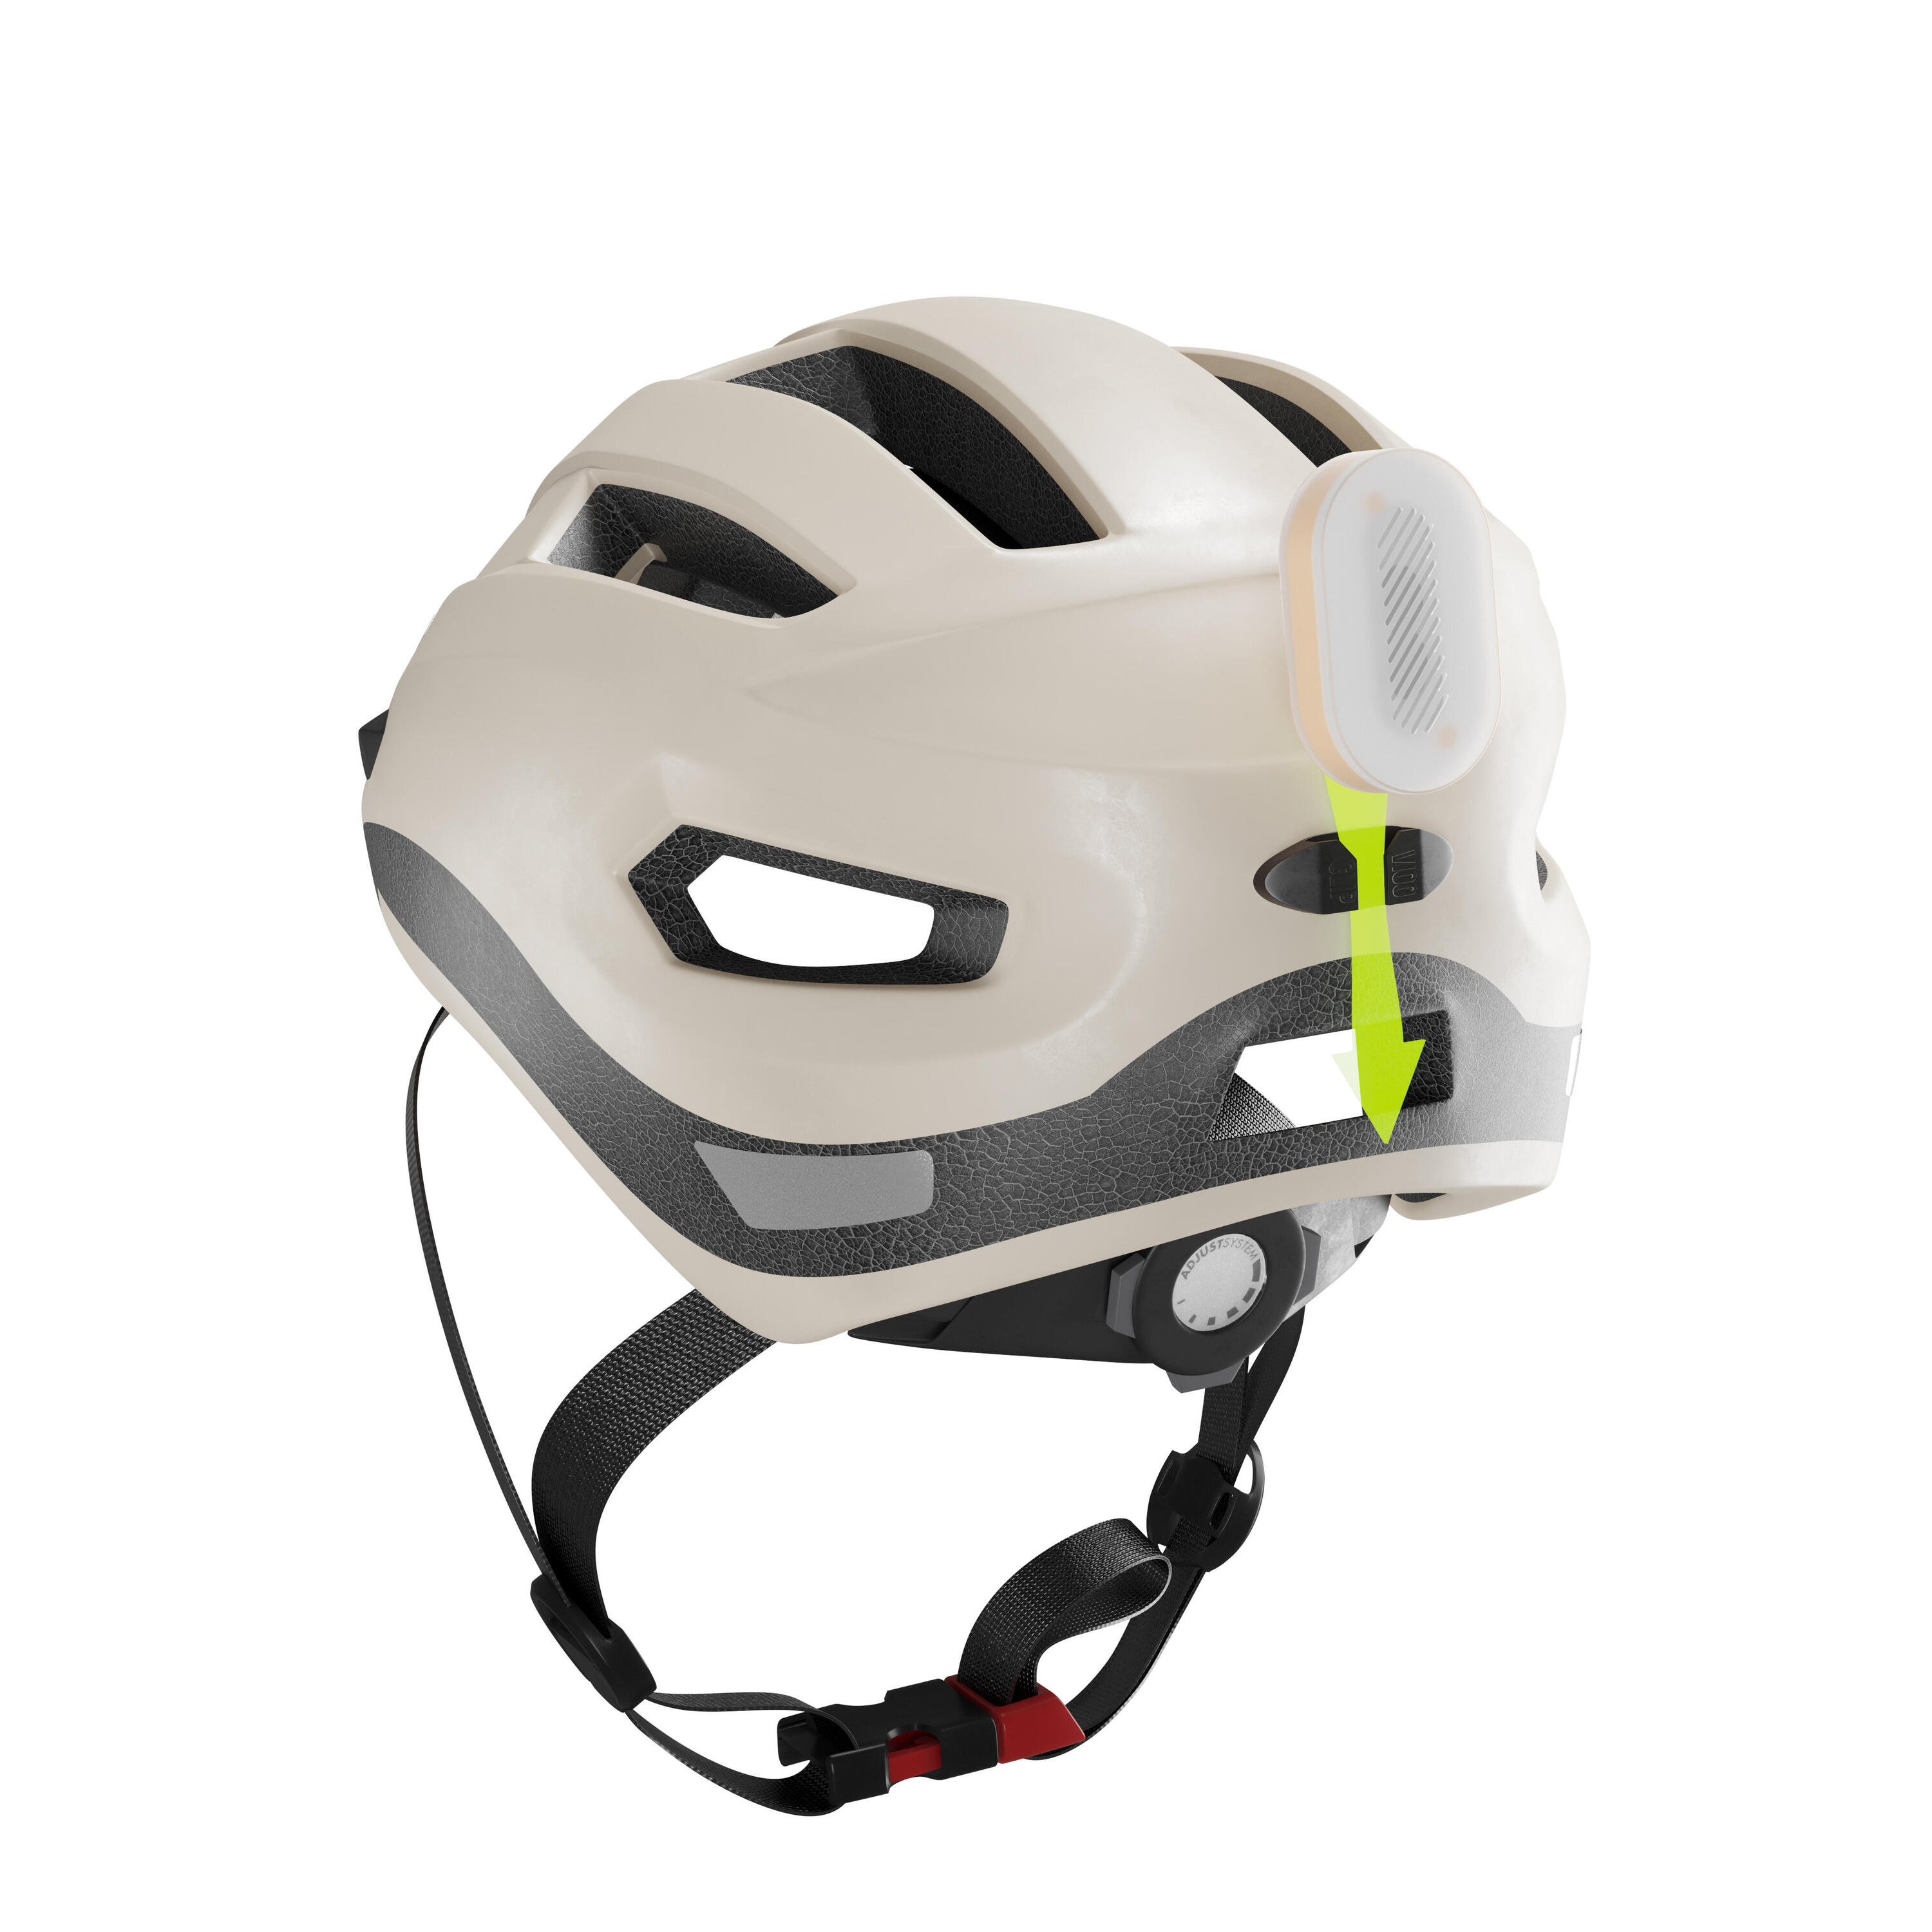 City Cycling Helmet 500 - Beige 4/6